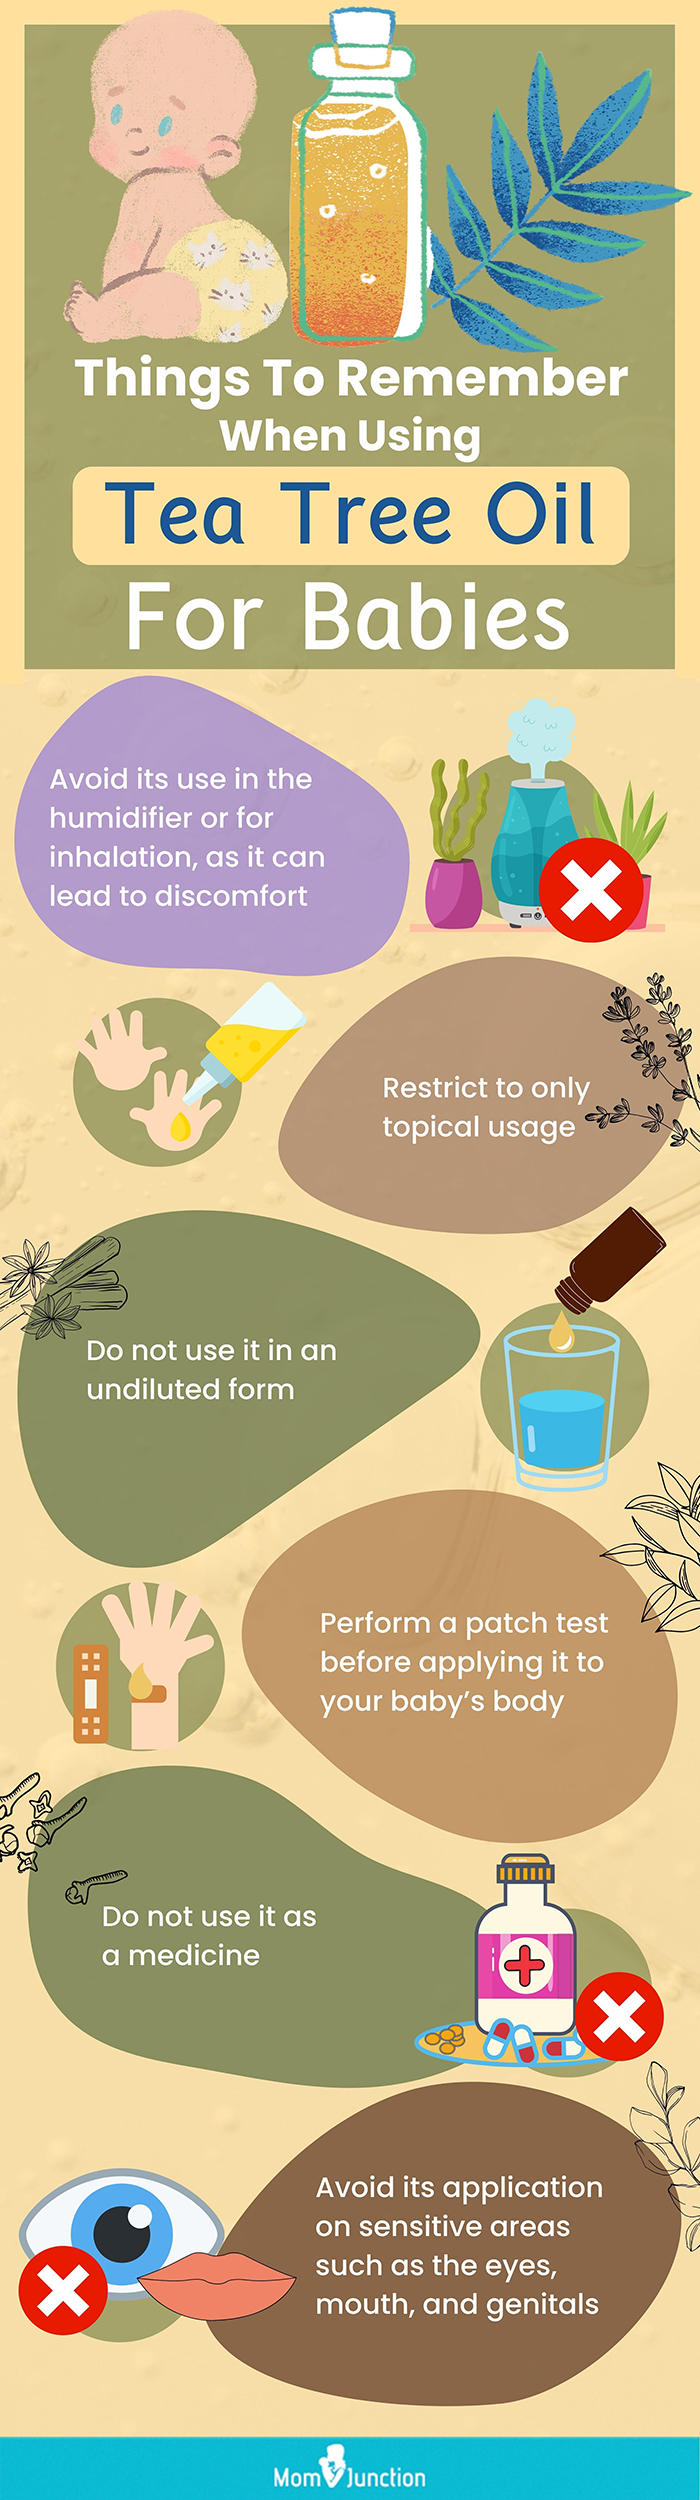 How to Use Tea Tree oil